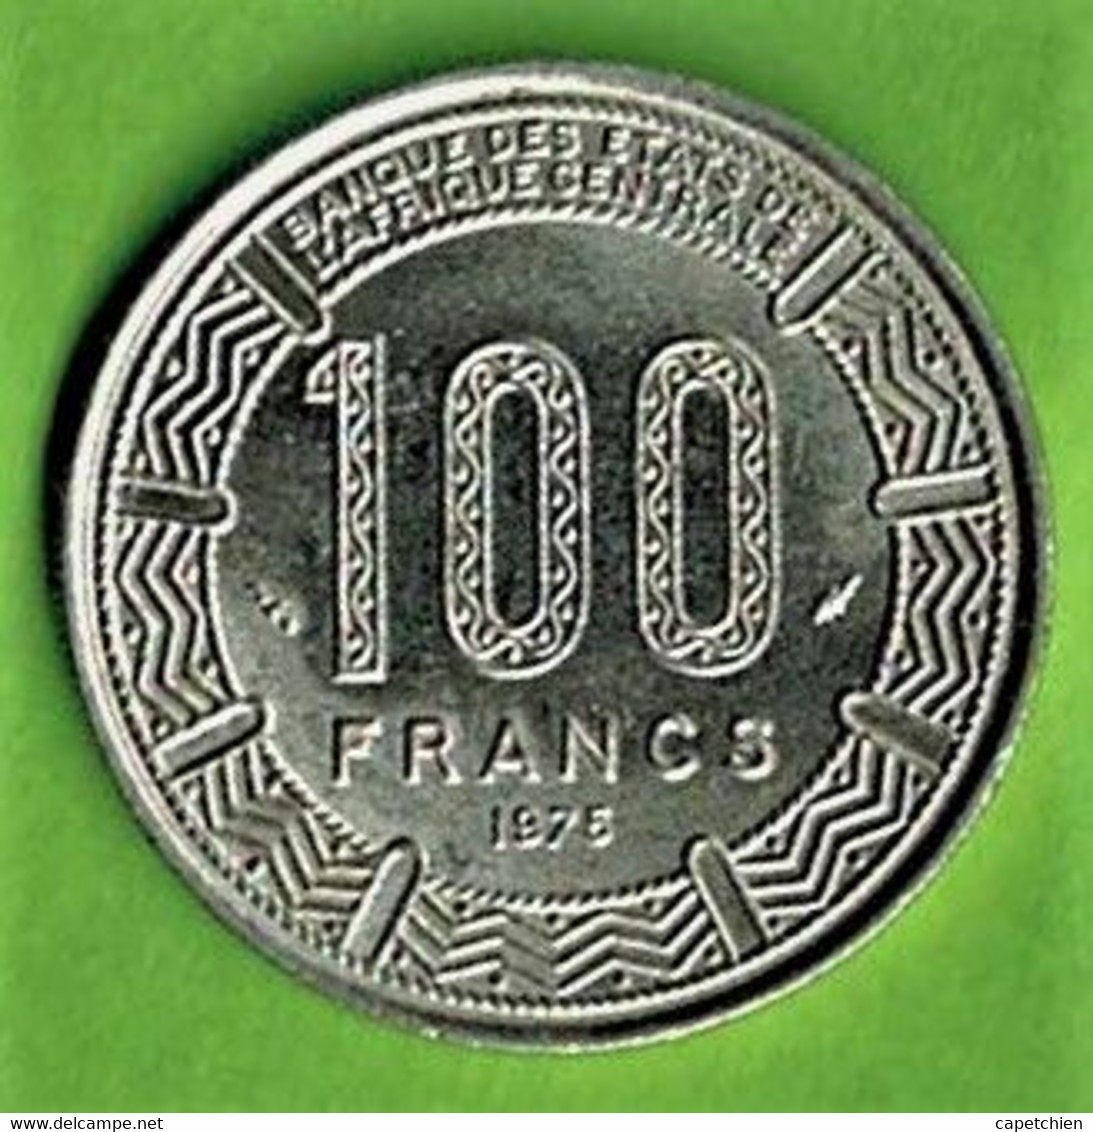 GABON / PEPUBLIQUE GABONAISE / 100 FRANCS  / 1975 / FDC - Gabun